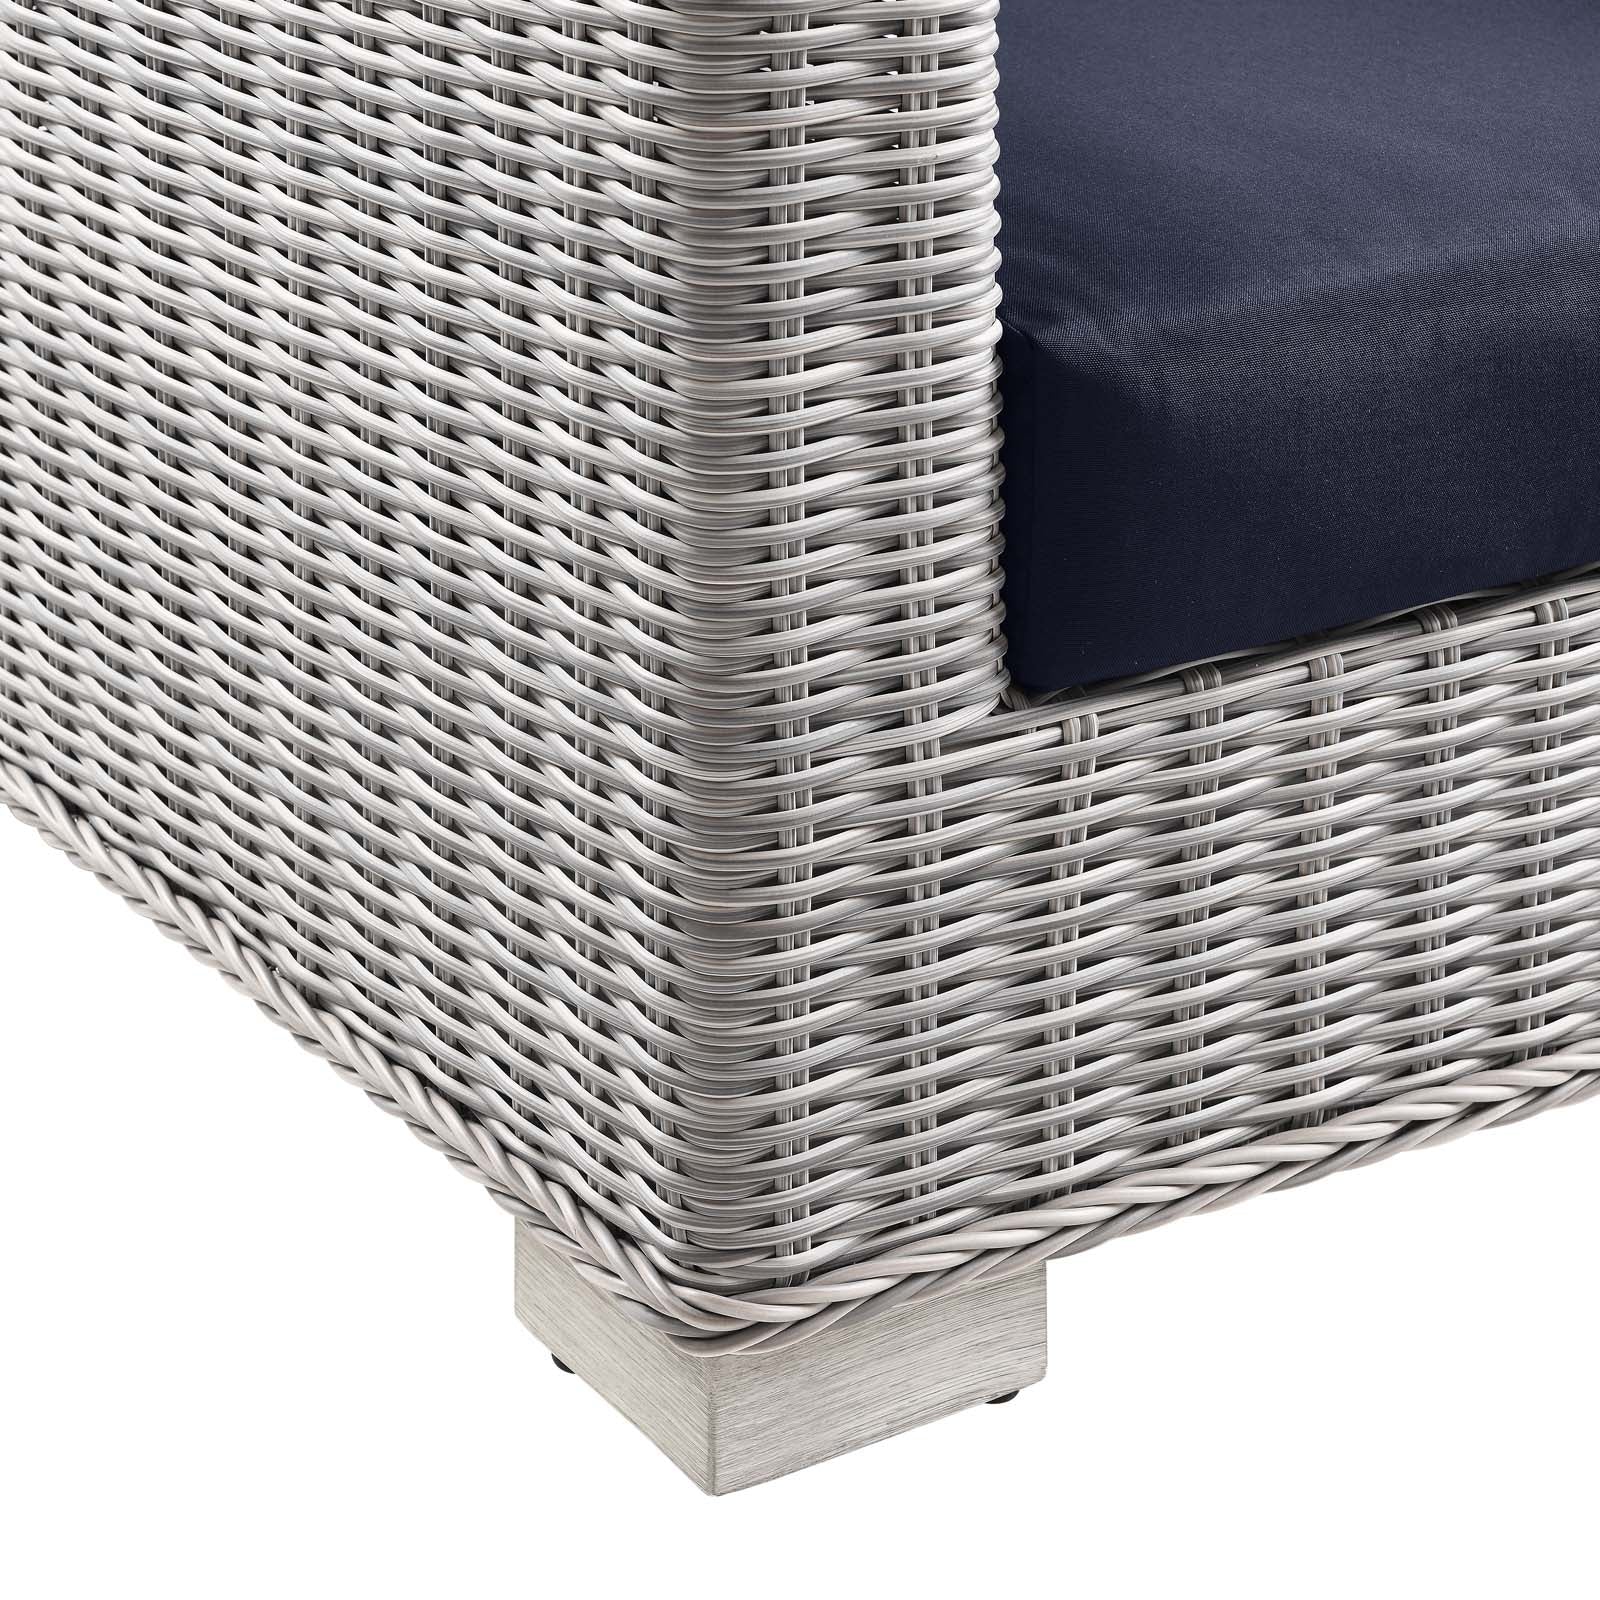 Modway Outdoor Conversation Sets - Conway 4 Piece Outdoor Patio Wicker Rattan Furniture Set Light Gray